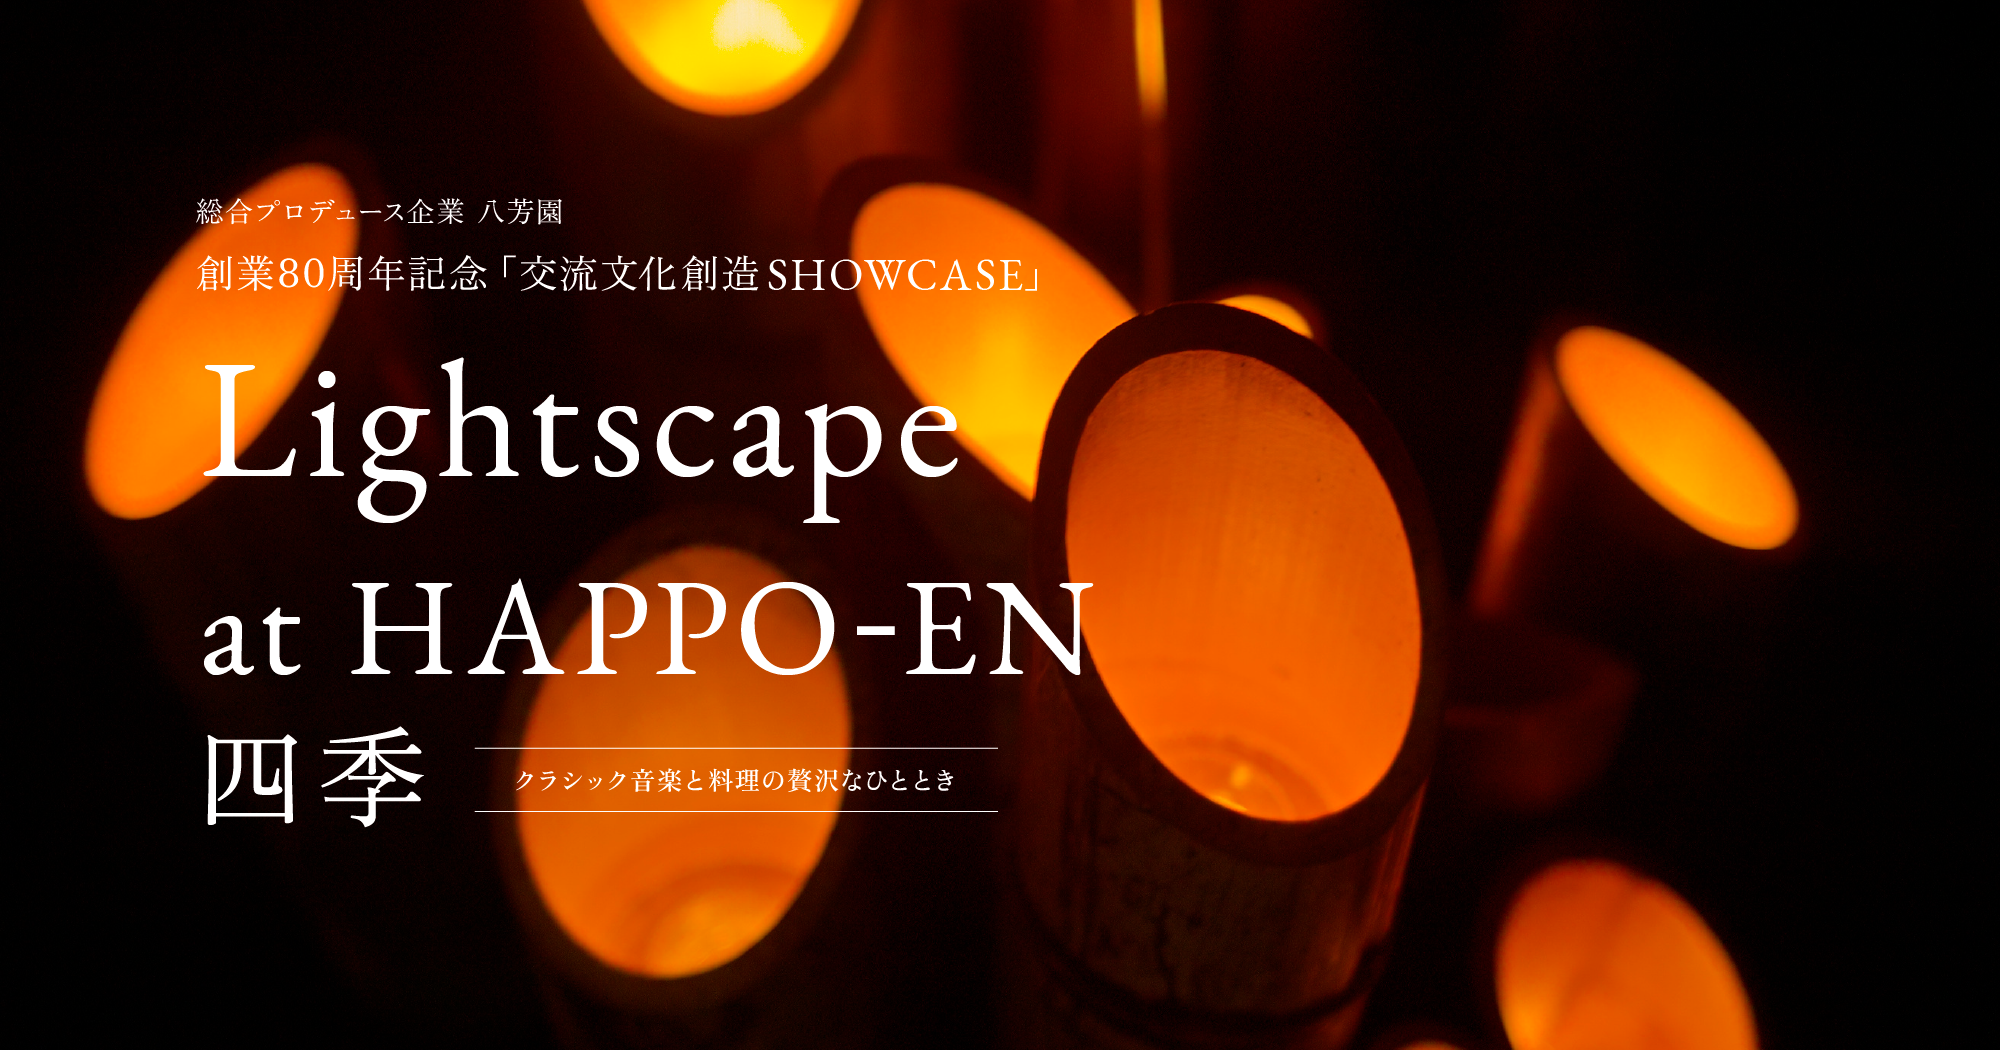 Lightscape at HAPPO-EN四季